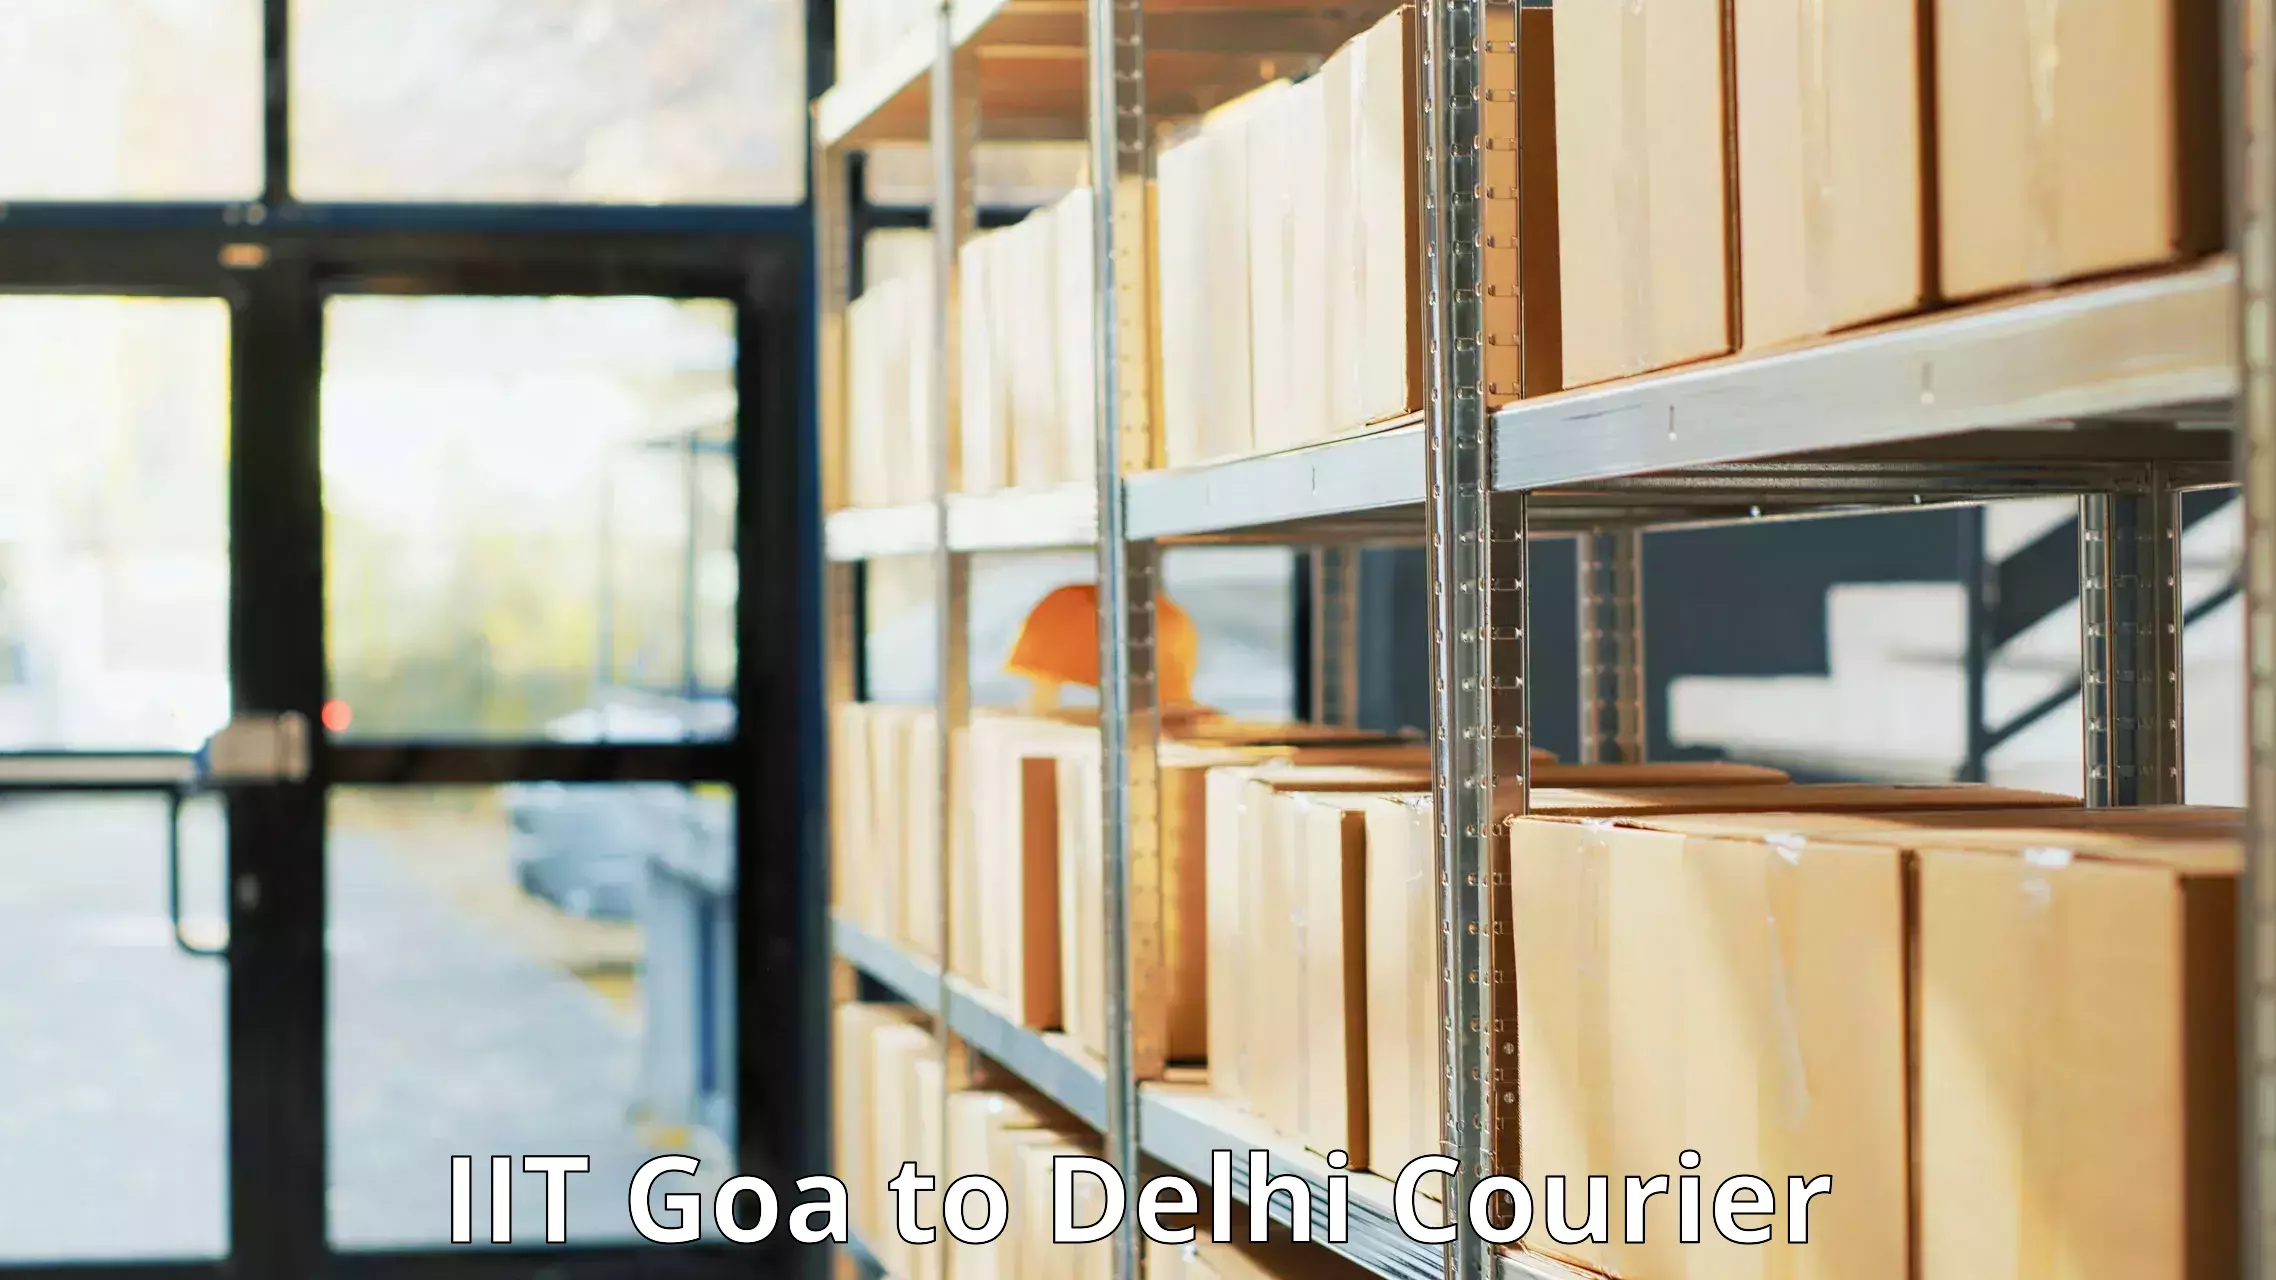 Courier service comparison in IIT Goa to IIT Delhi